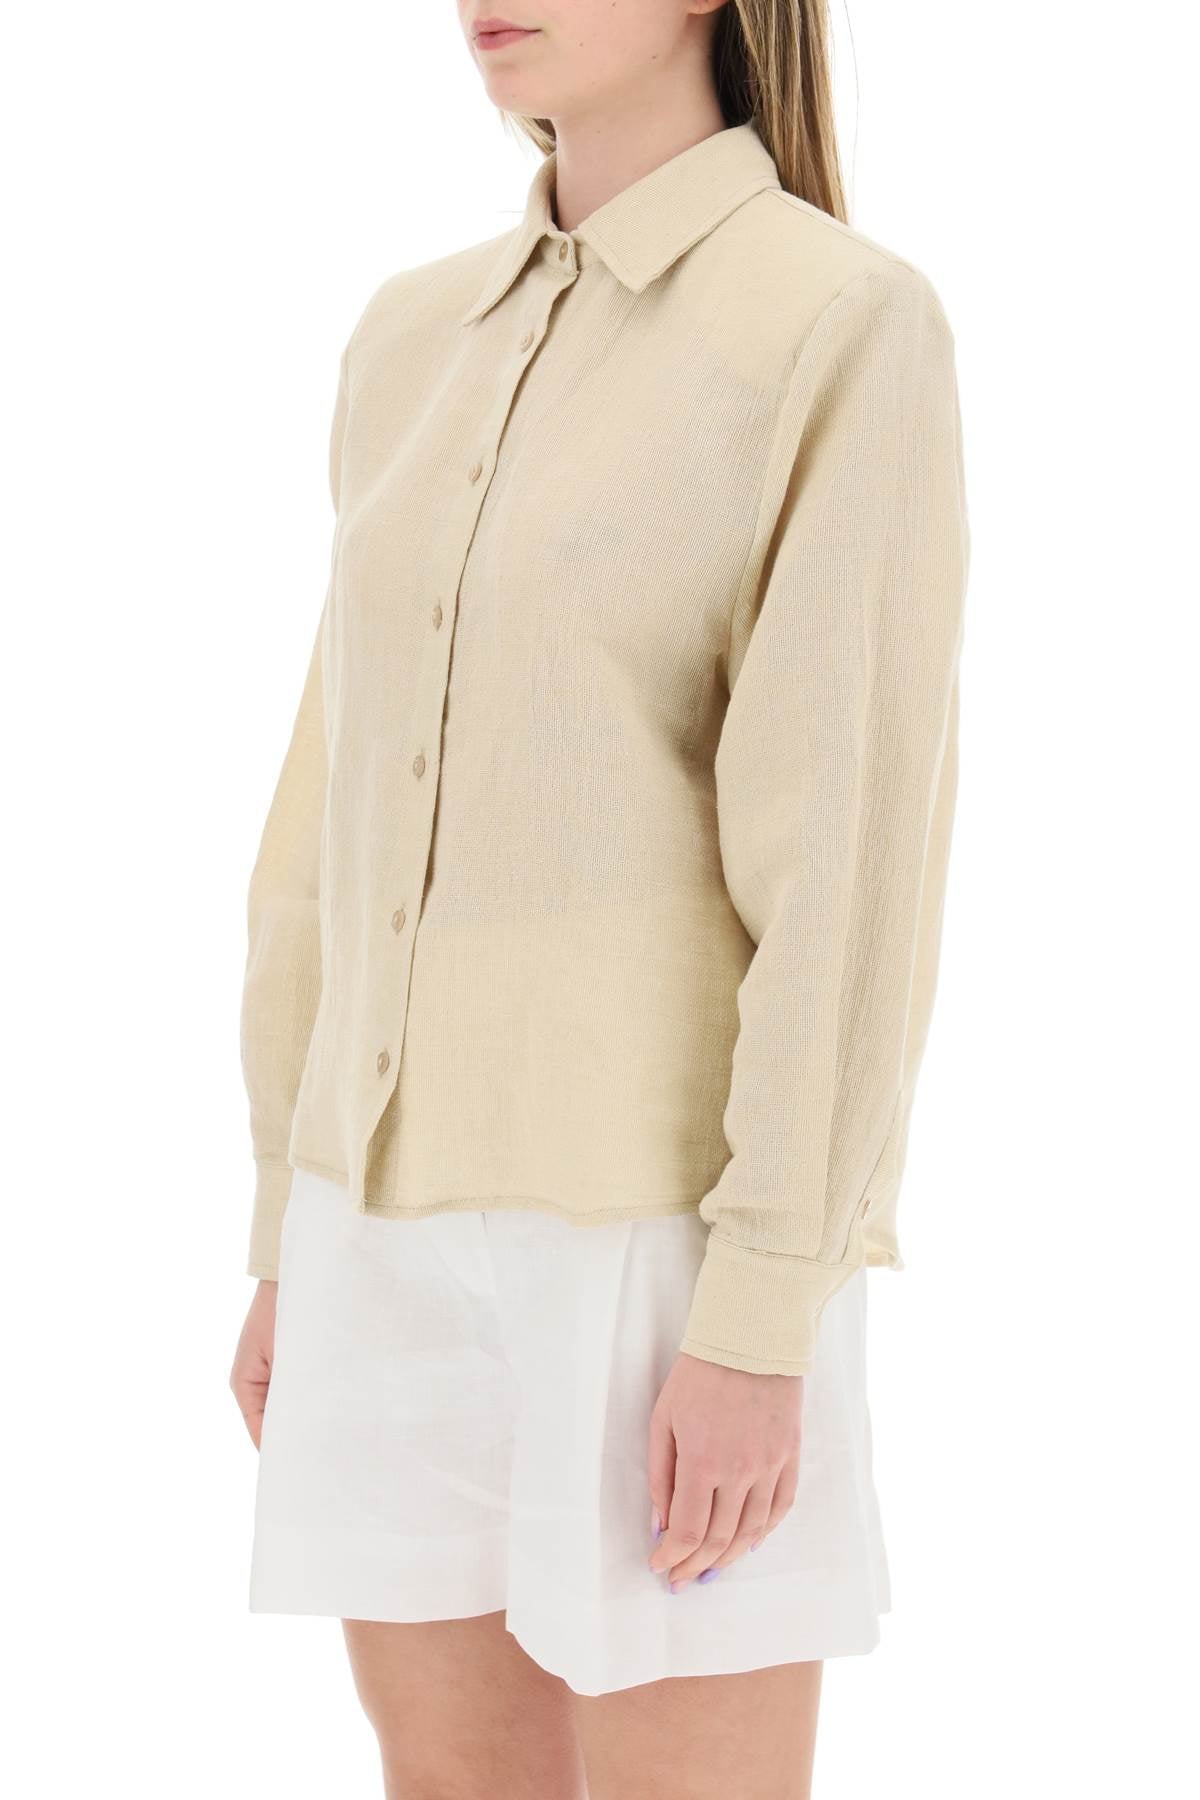 Mvp wardrobe 'malibu' cotton linen shirt-3